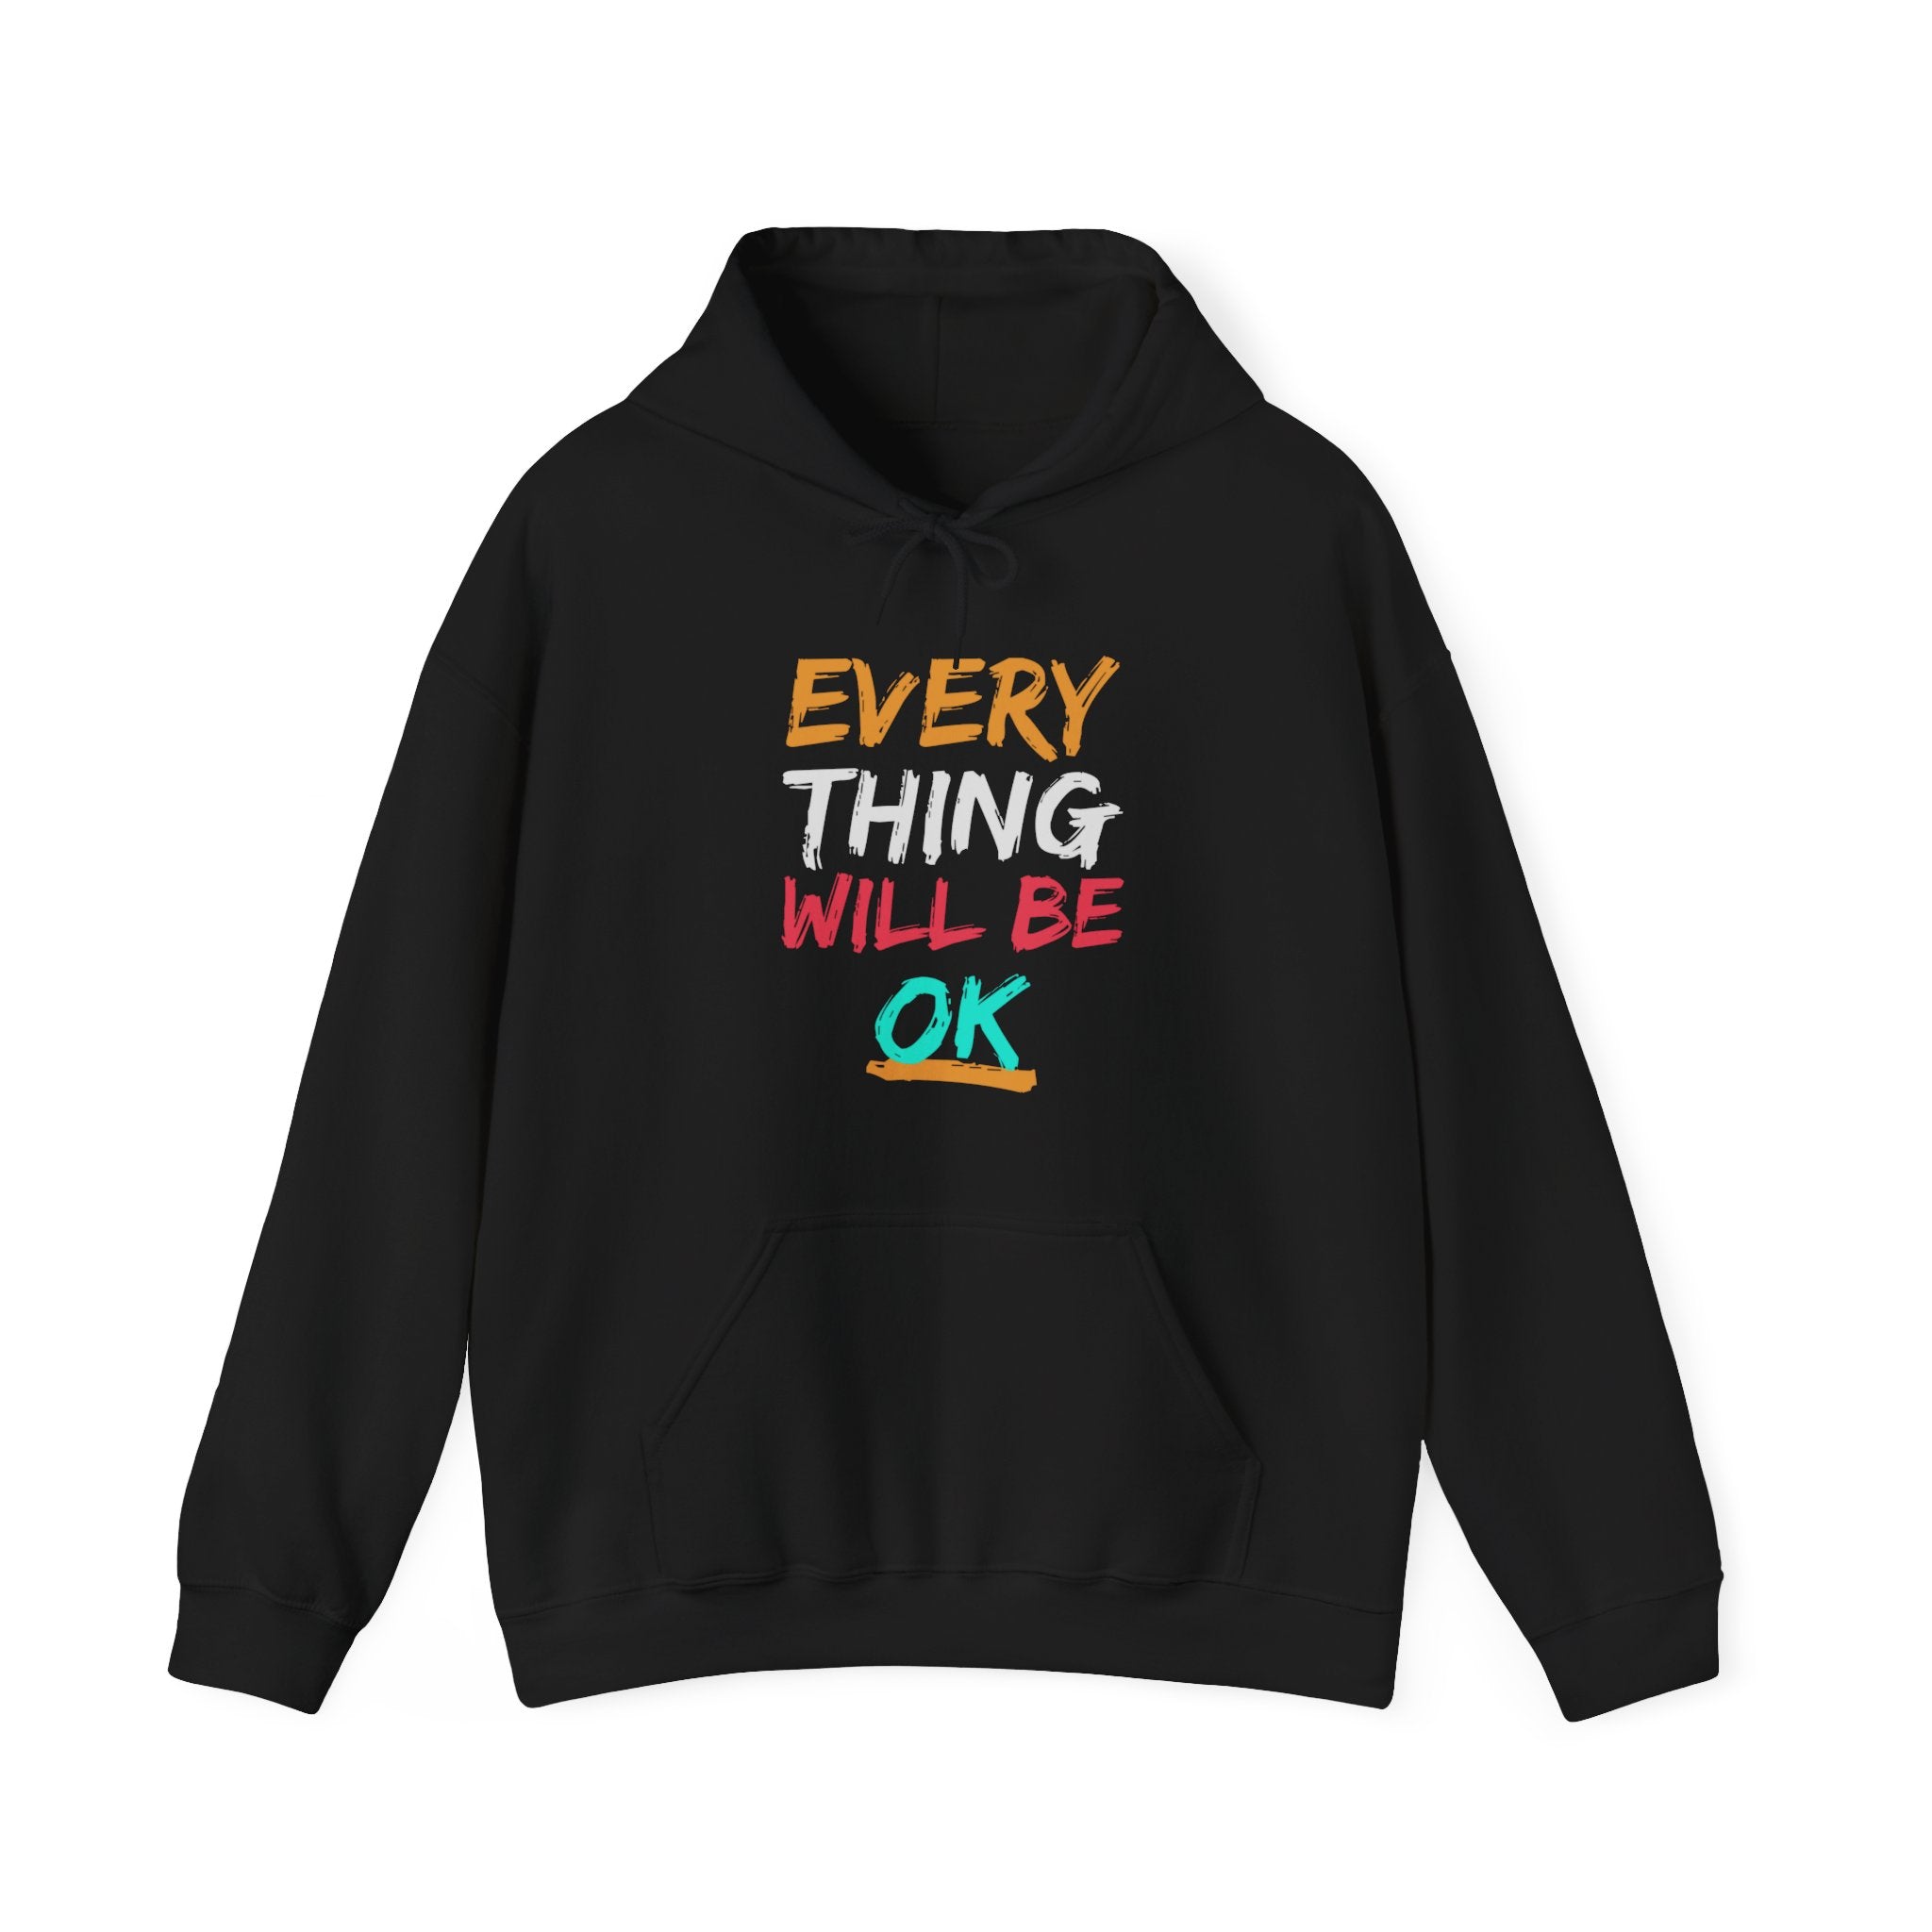 Everything will be Ok - Hooded Sweatshirt